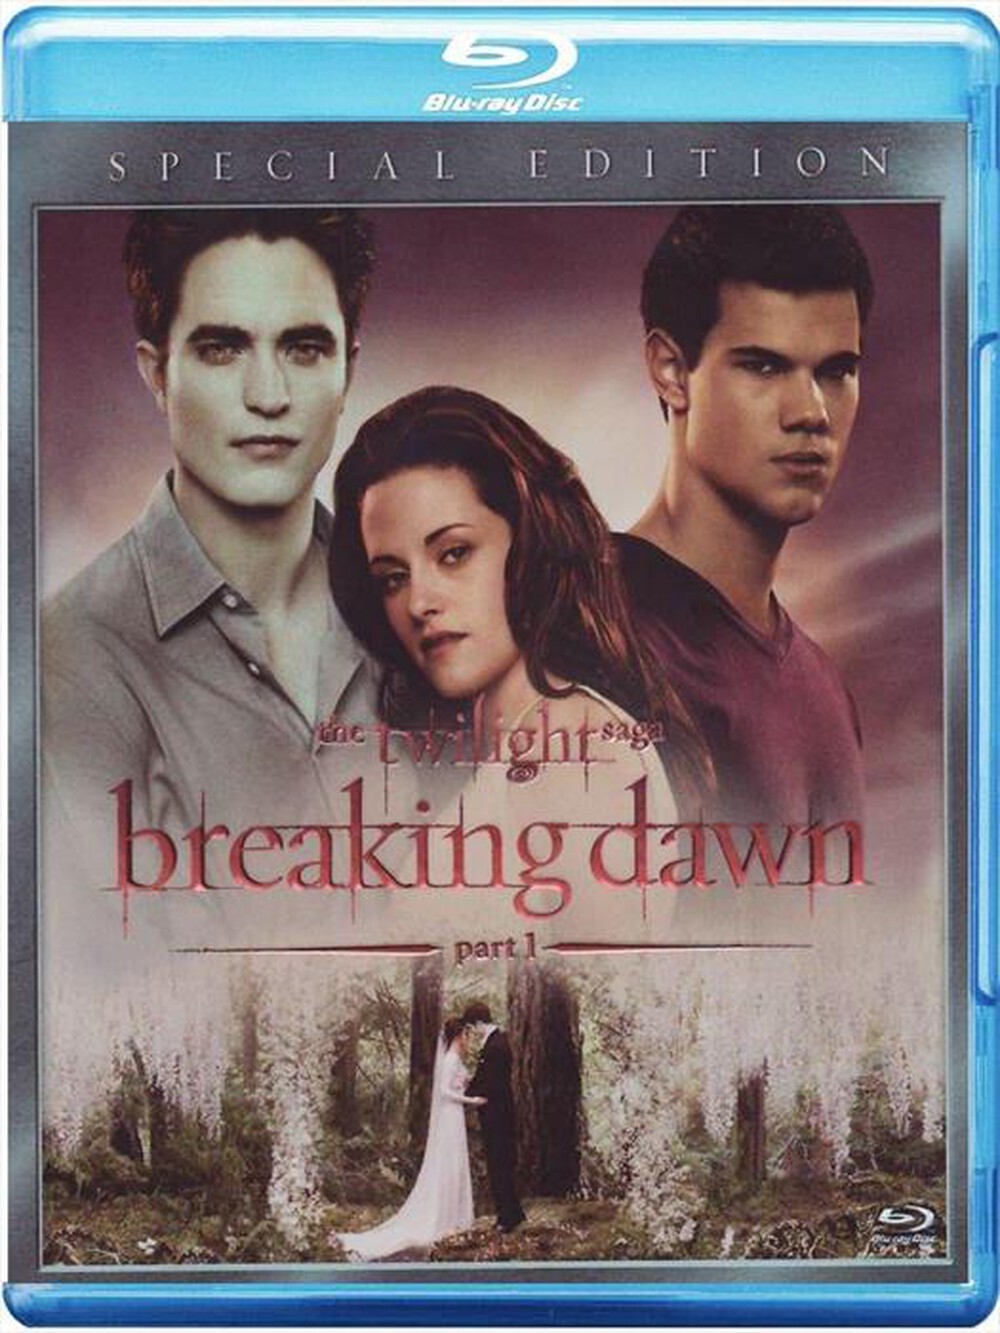 "EAGLE PICTURES - Breaking Dawn - Parte 1 - The Twilight Saga (SE) - "